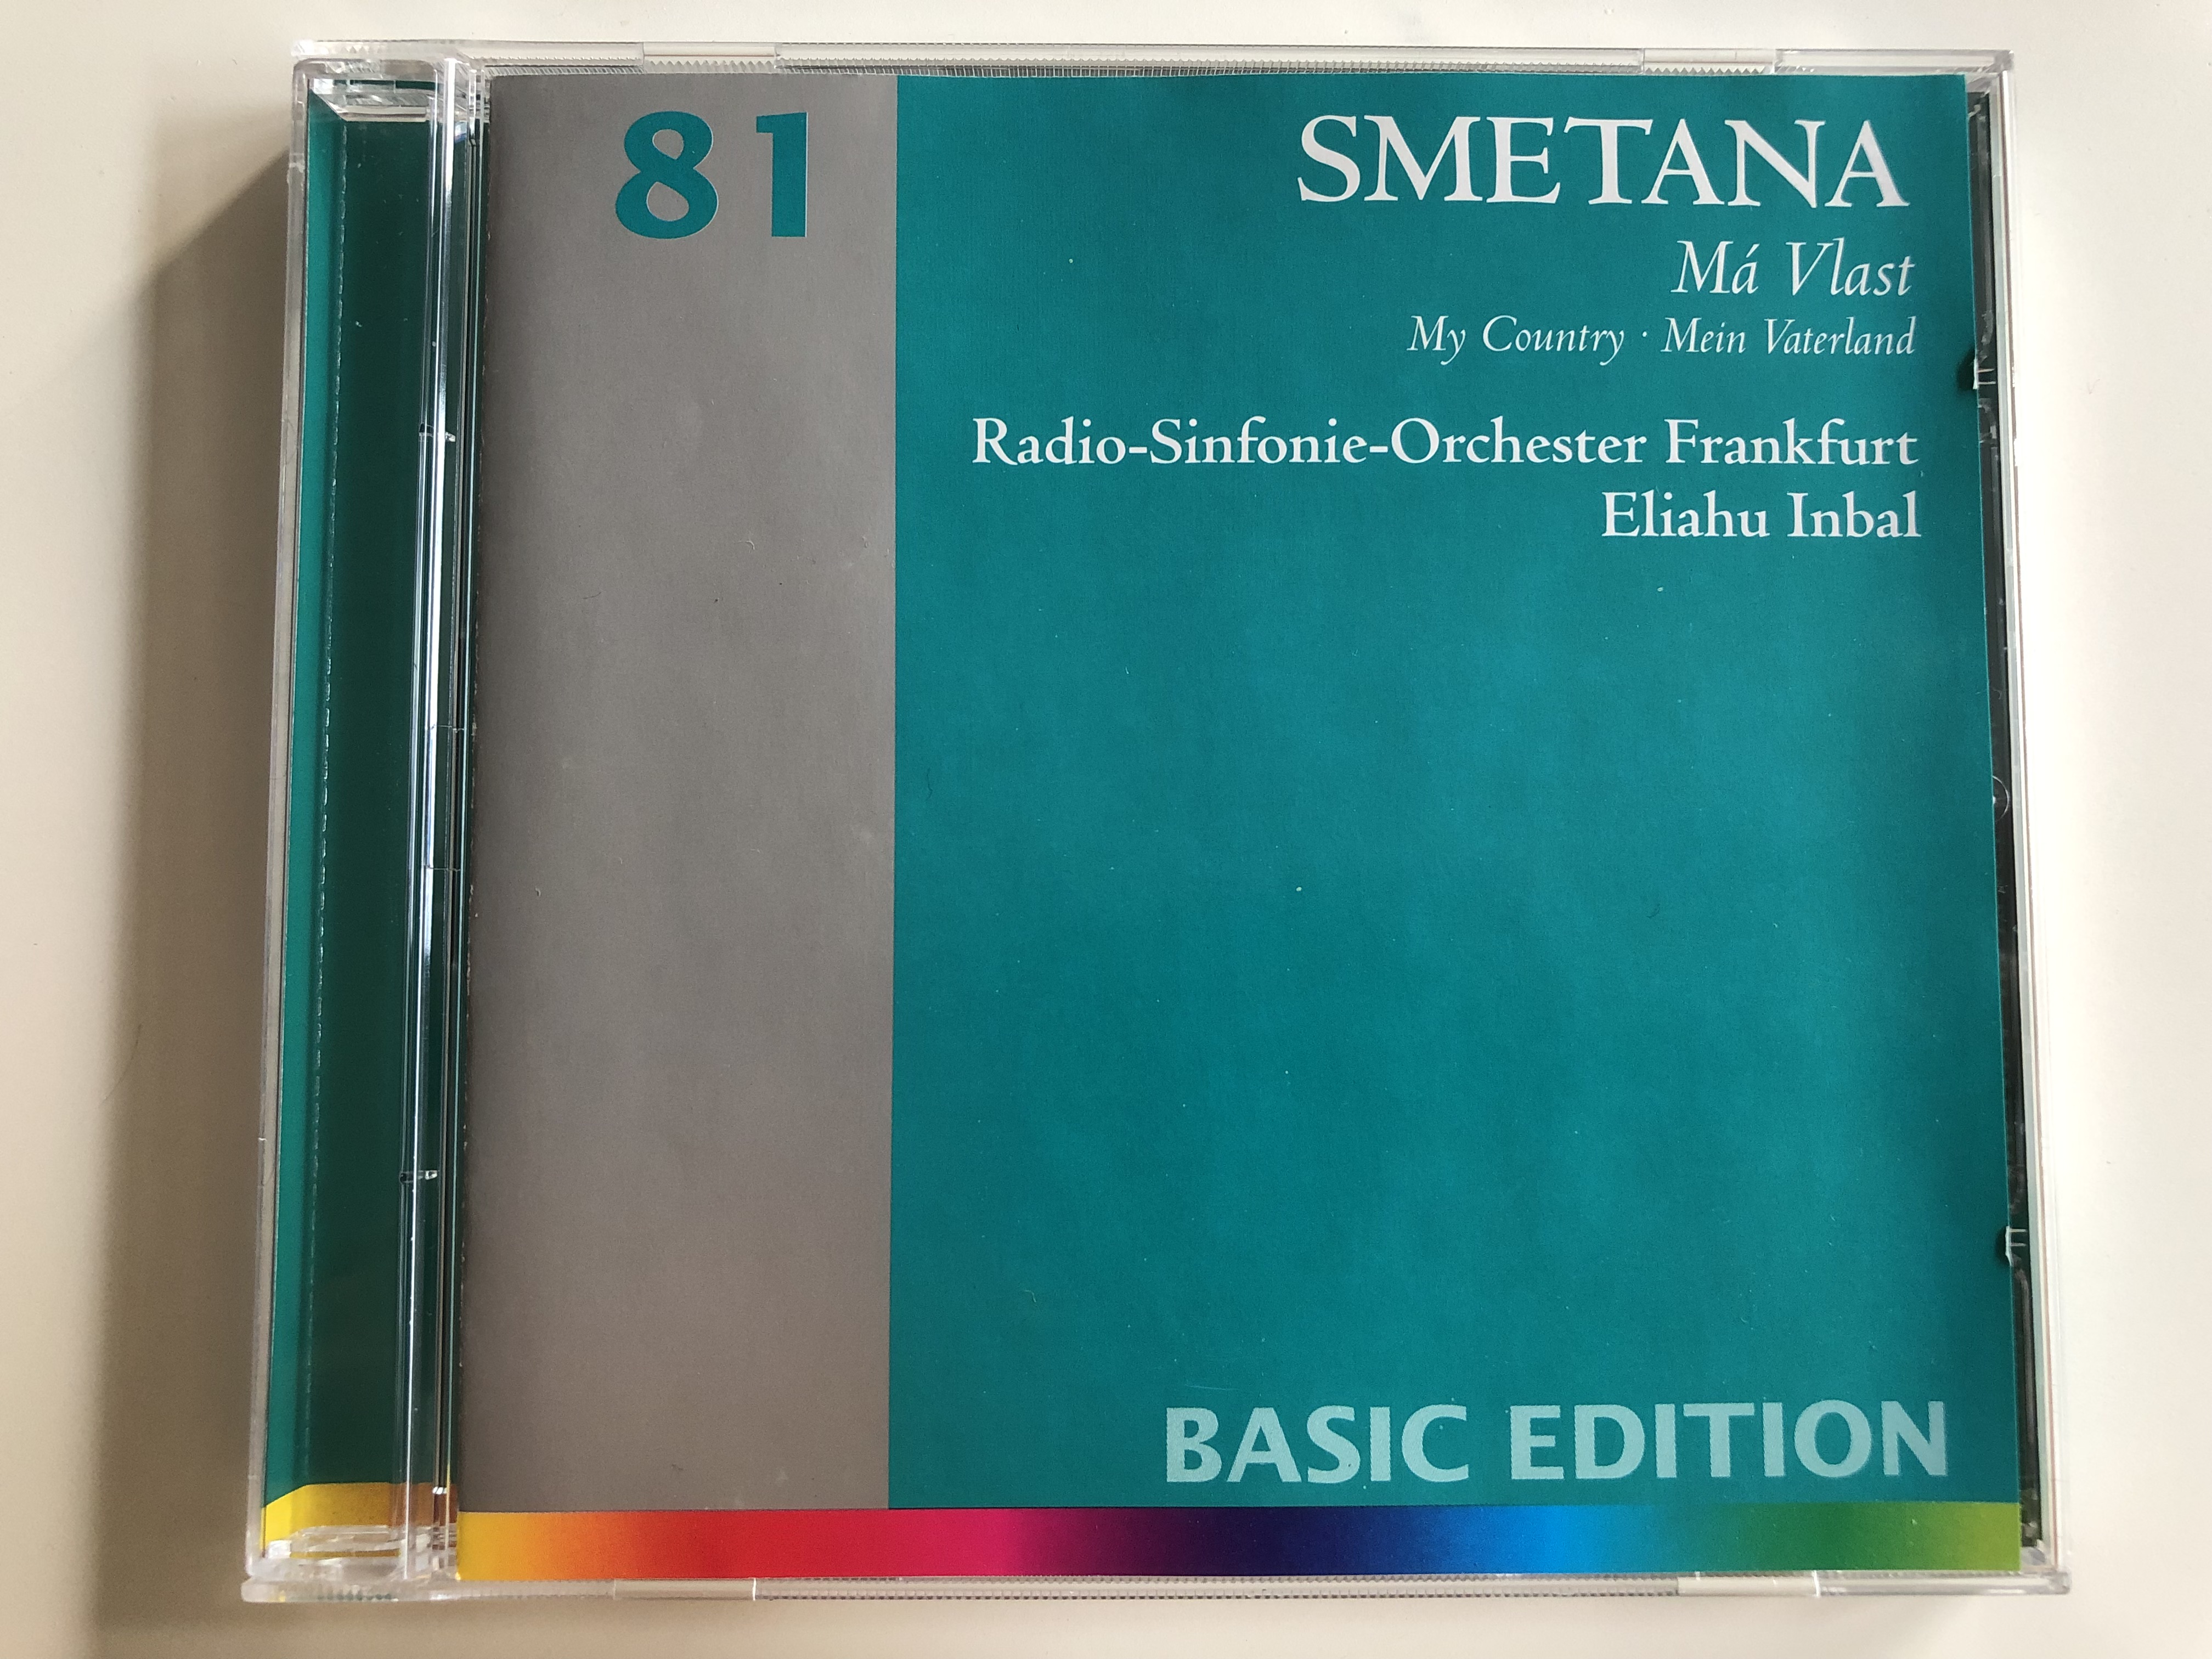 smetana-m-vlast-my-country-radio-sinfonie-orchester-frankfurt-conducted-by-eliahu-inbal-basic-edition-81-audio-cd-2001-1-.jpg